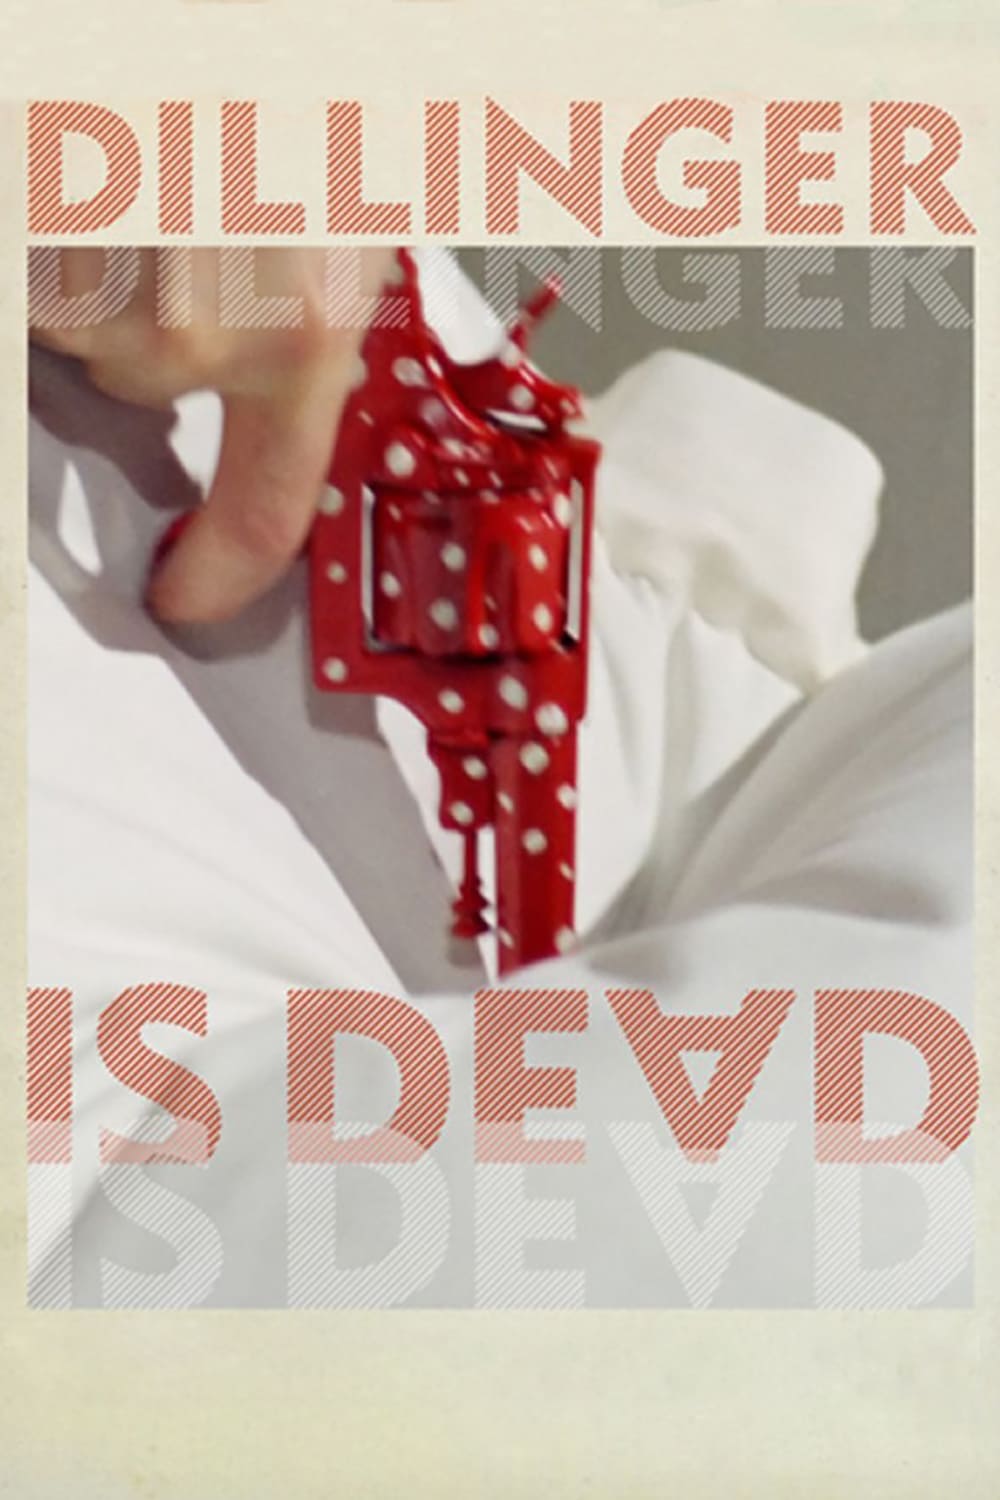 Dillinger Is Dead (1969)